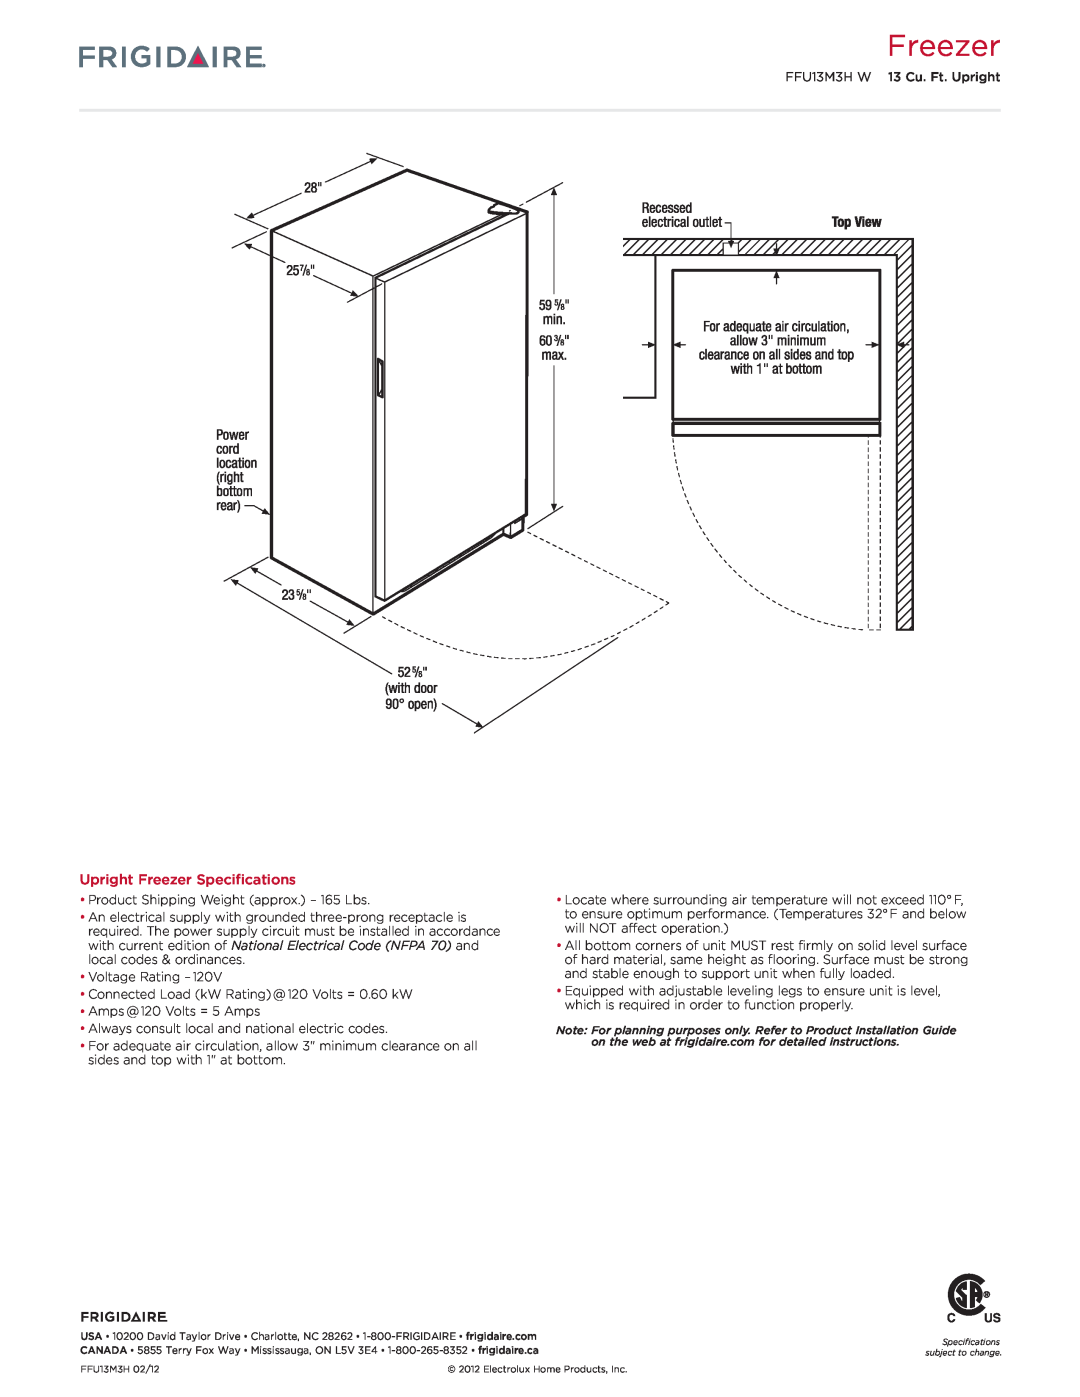 Frigidaire FFU13M3H W dimensions Upright Freezer Specifications 